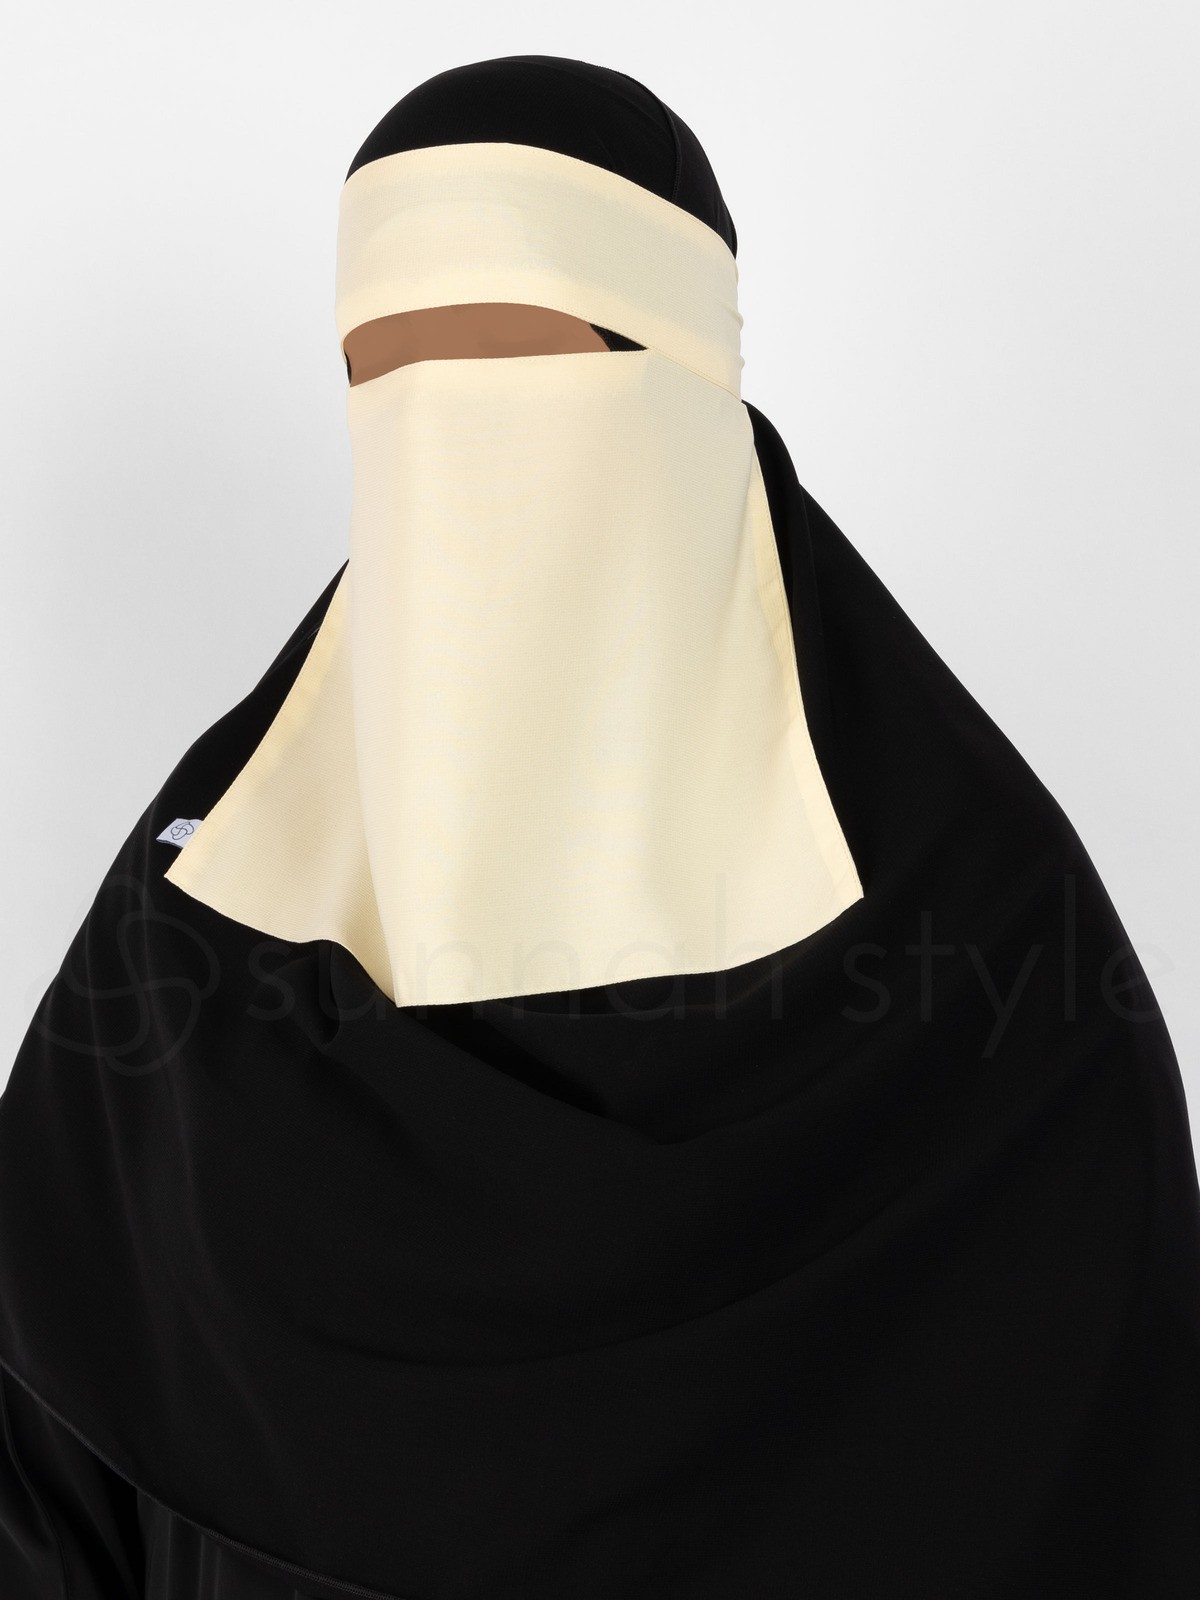 Sunnah Style - Short One Layer Niqab (Vanilla Cream)